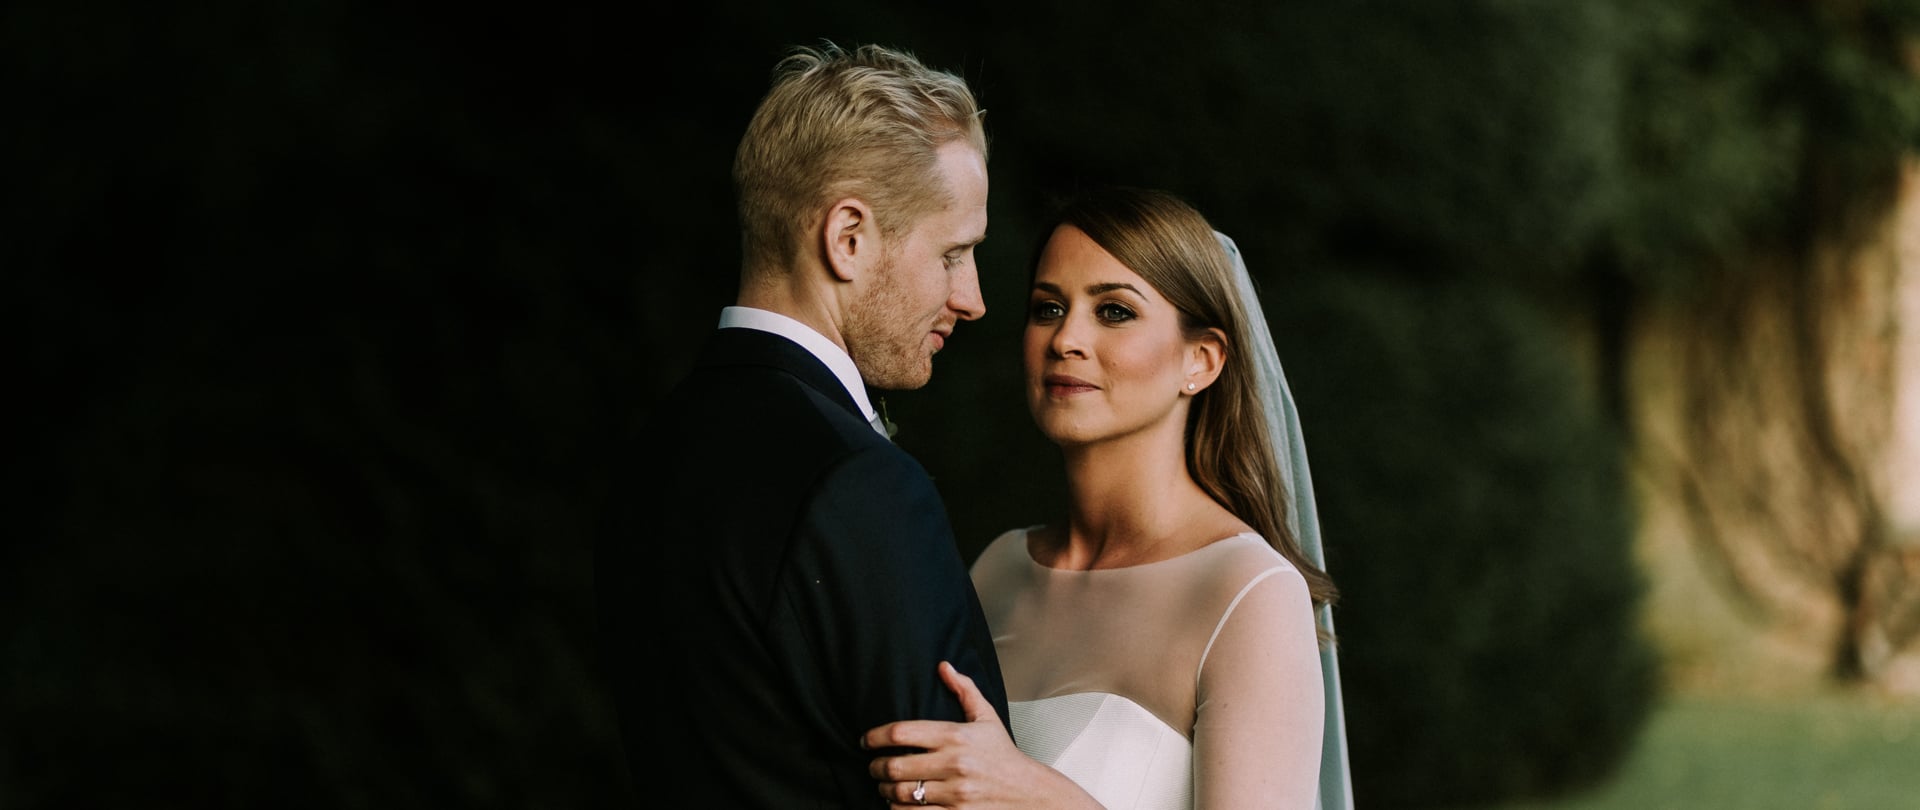 Polly & Michael Wedding Video Filmed atNorfolk,England